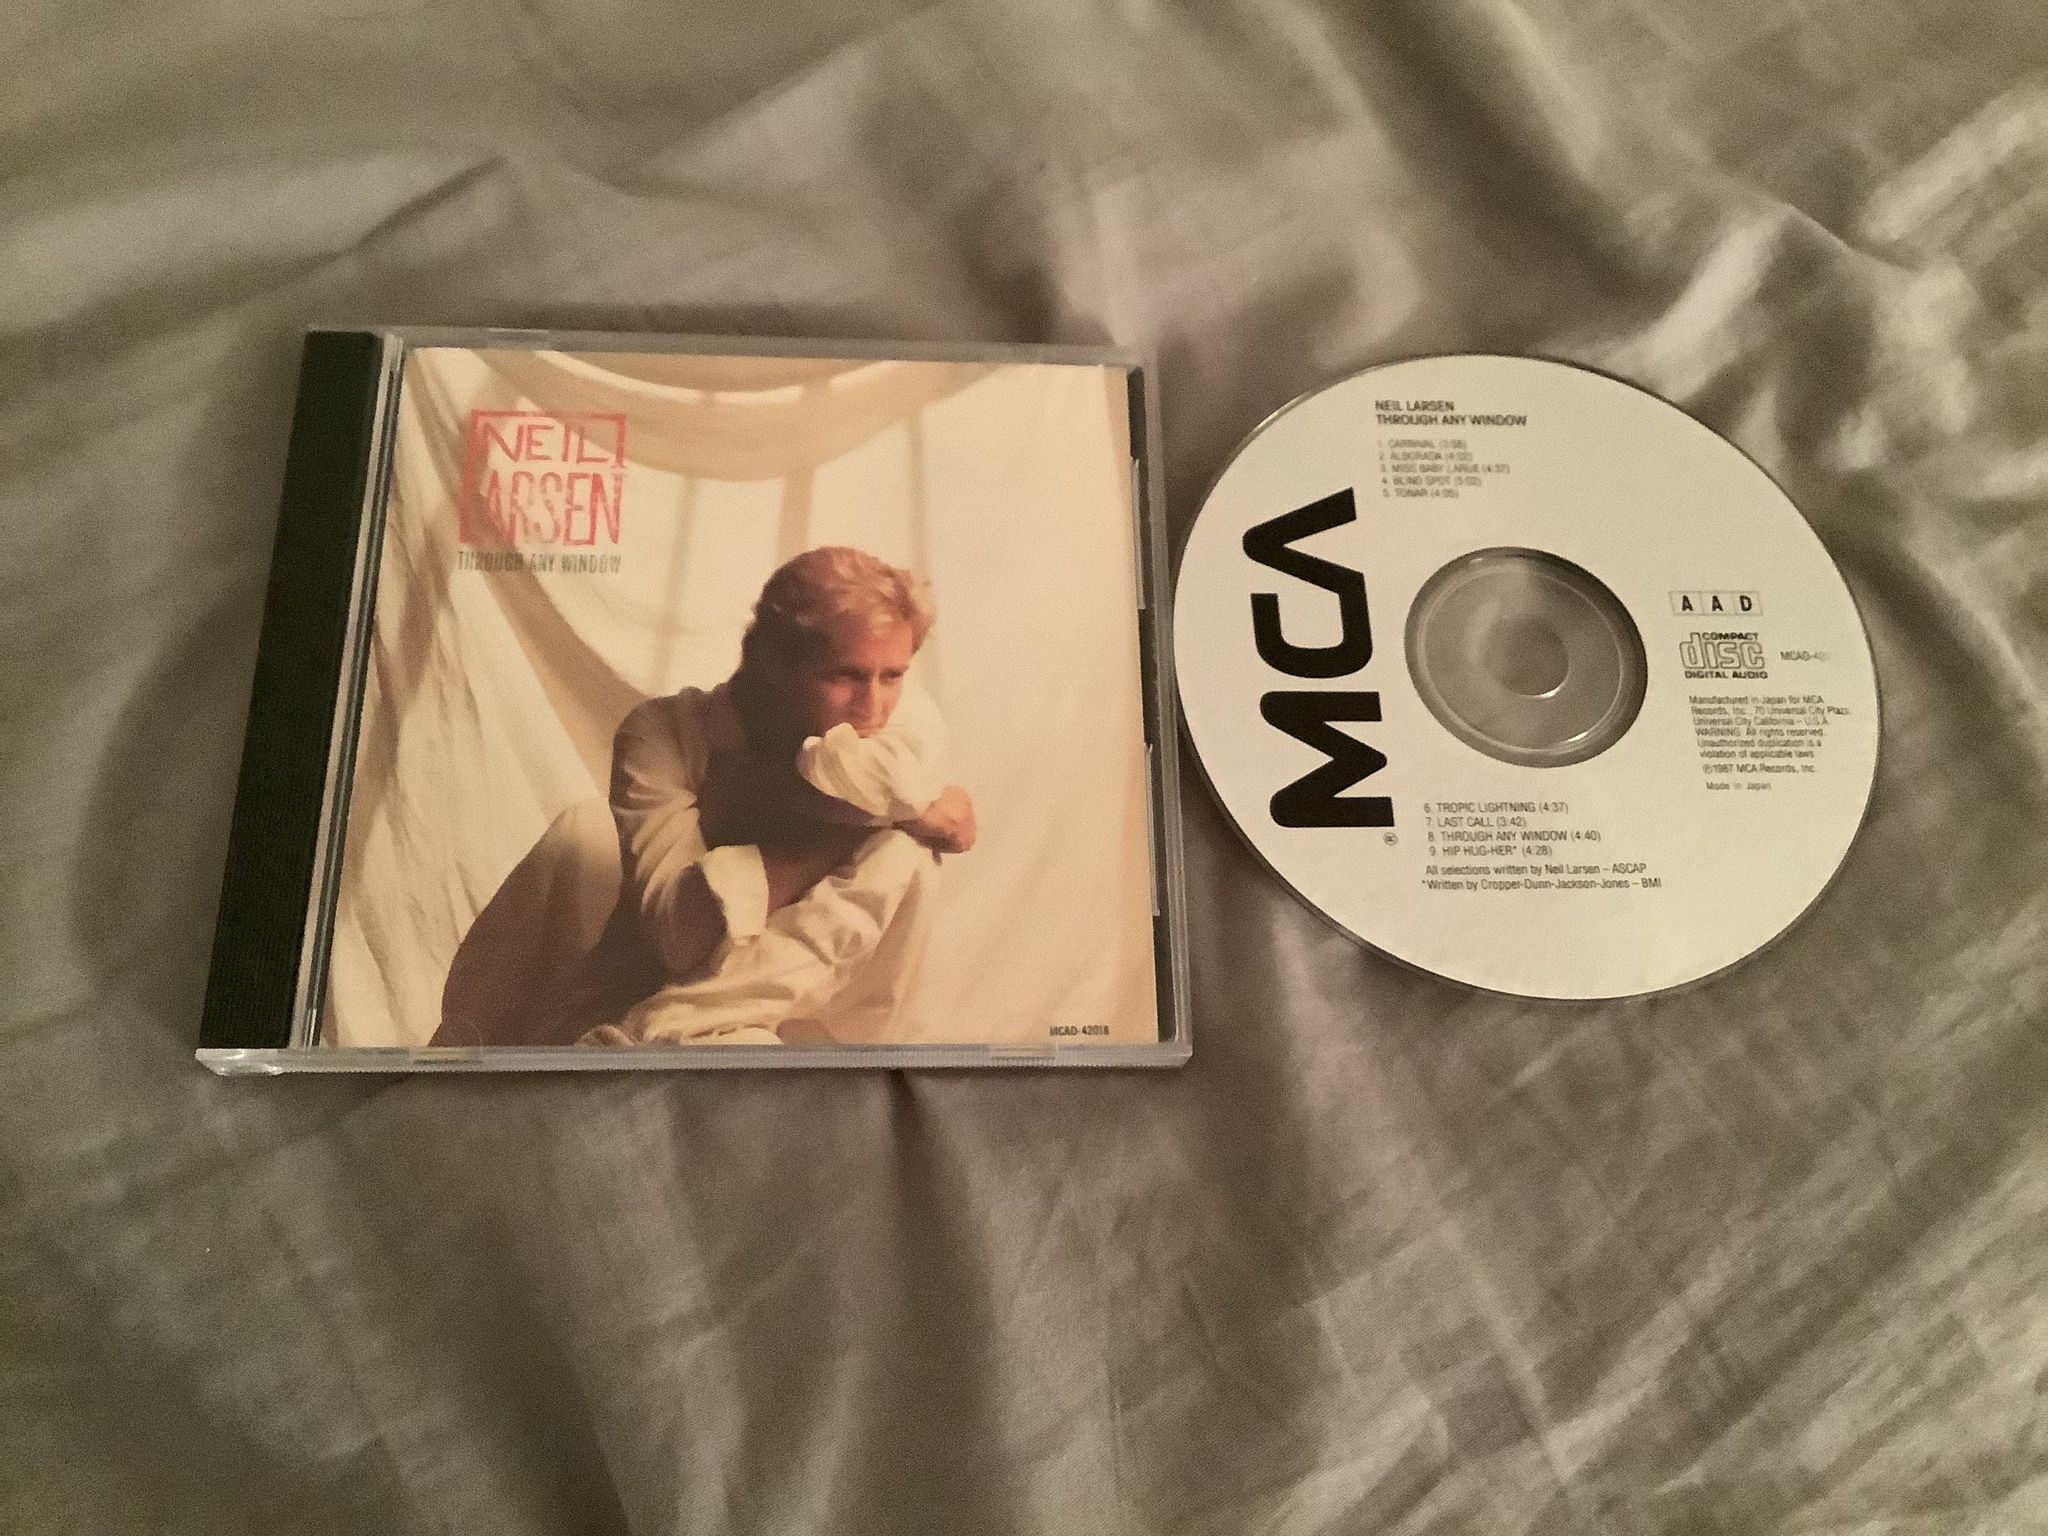 Neil Larsen MCA Records Japan Through Any Window